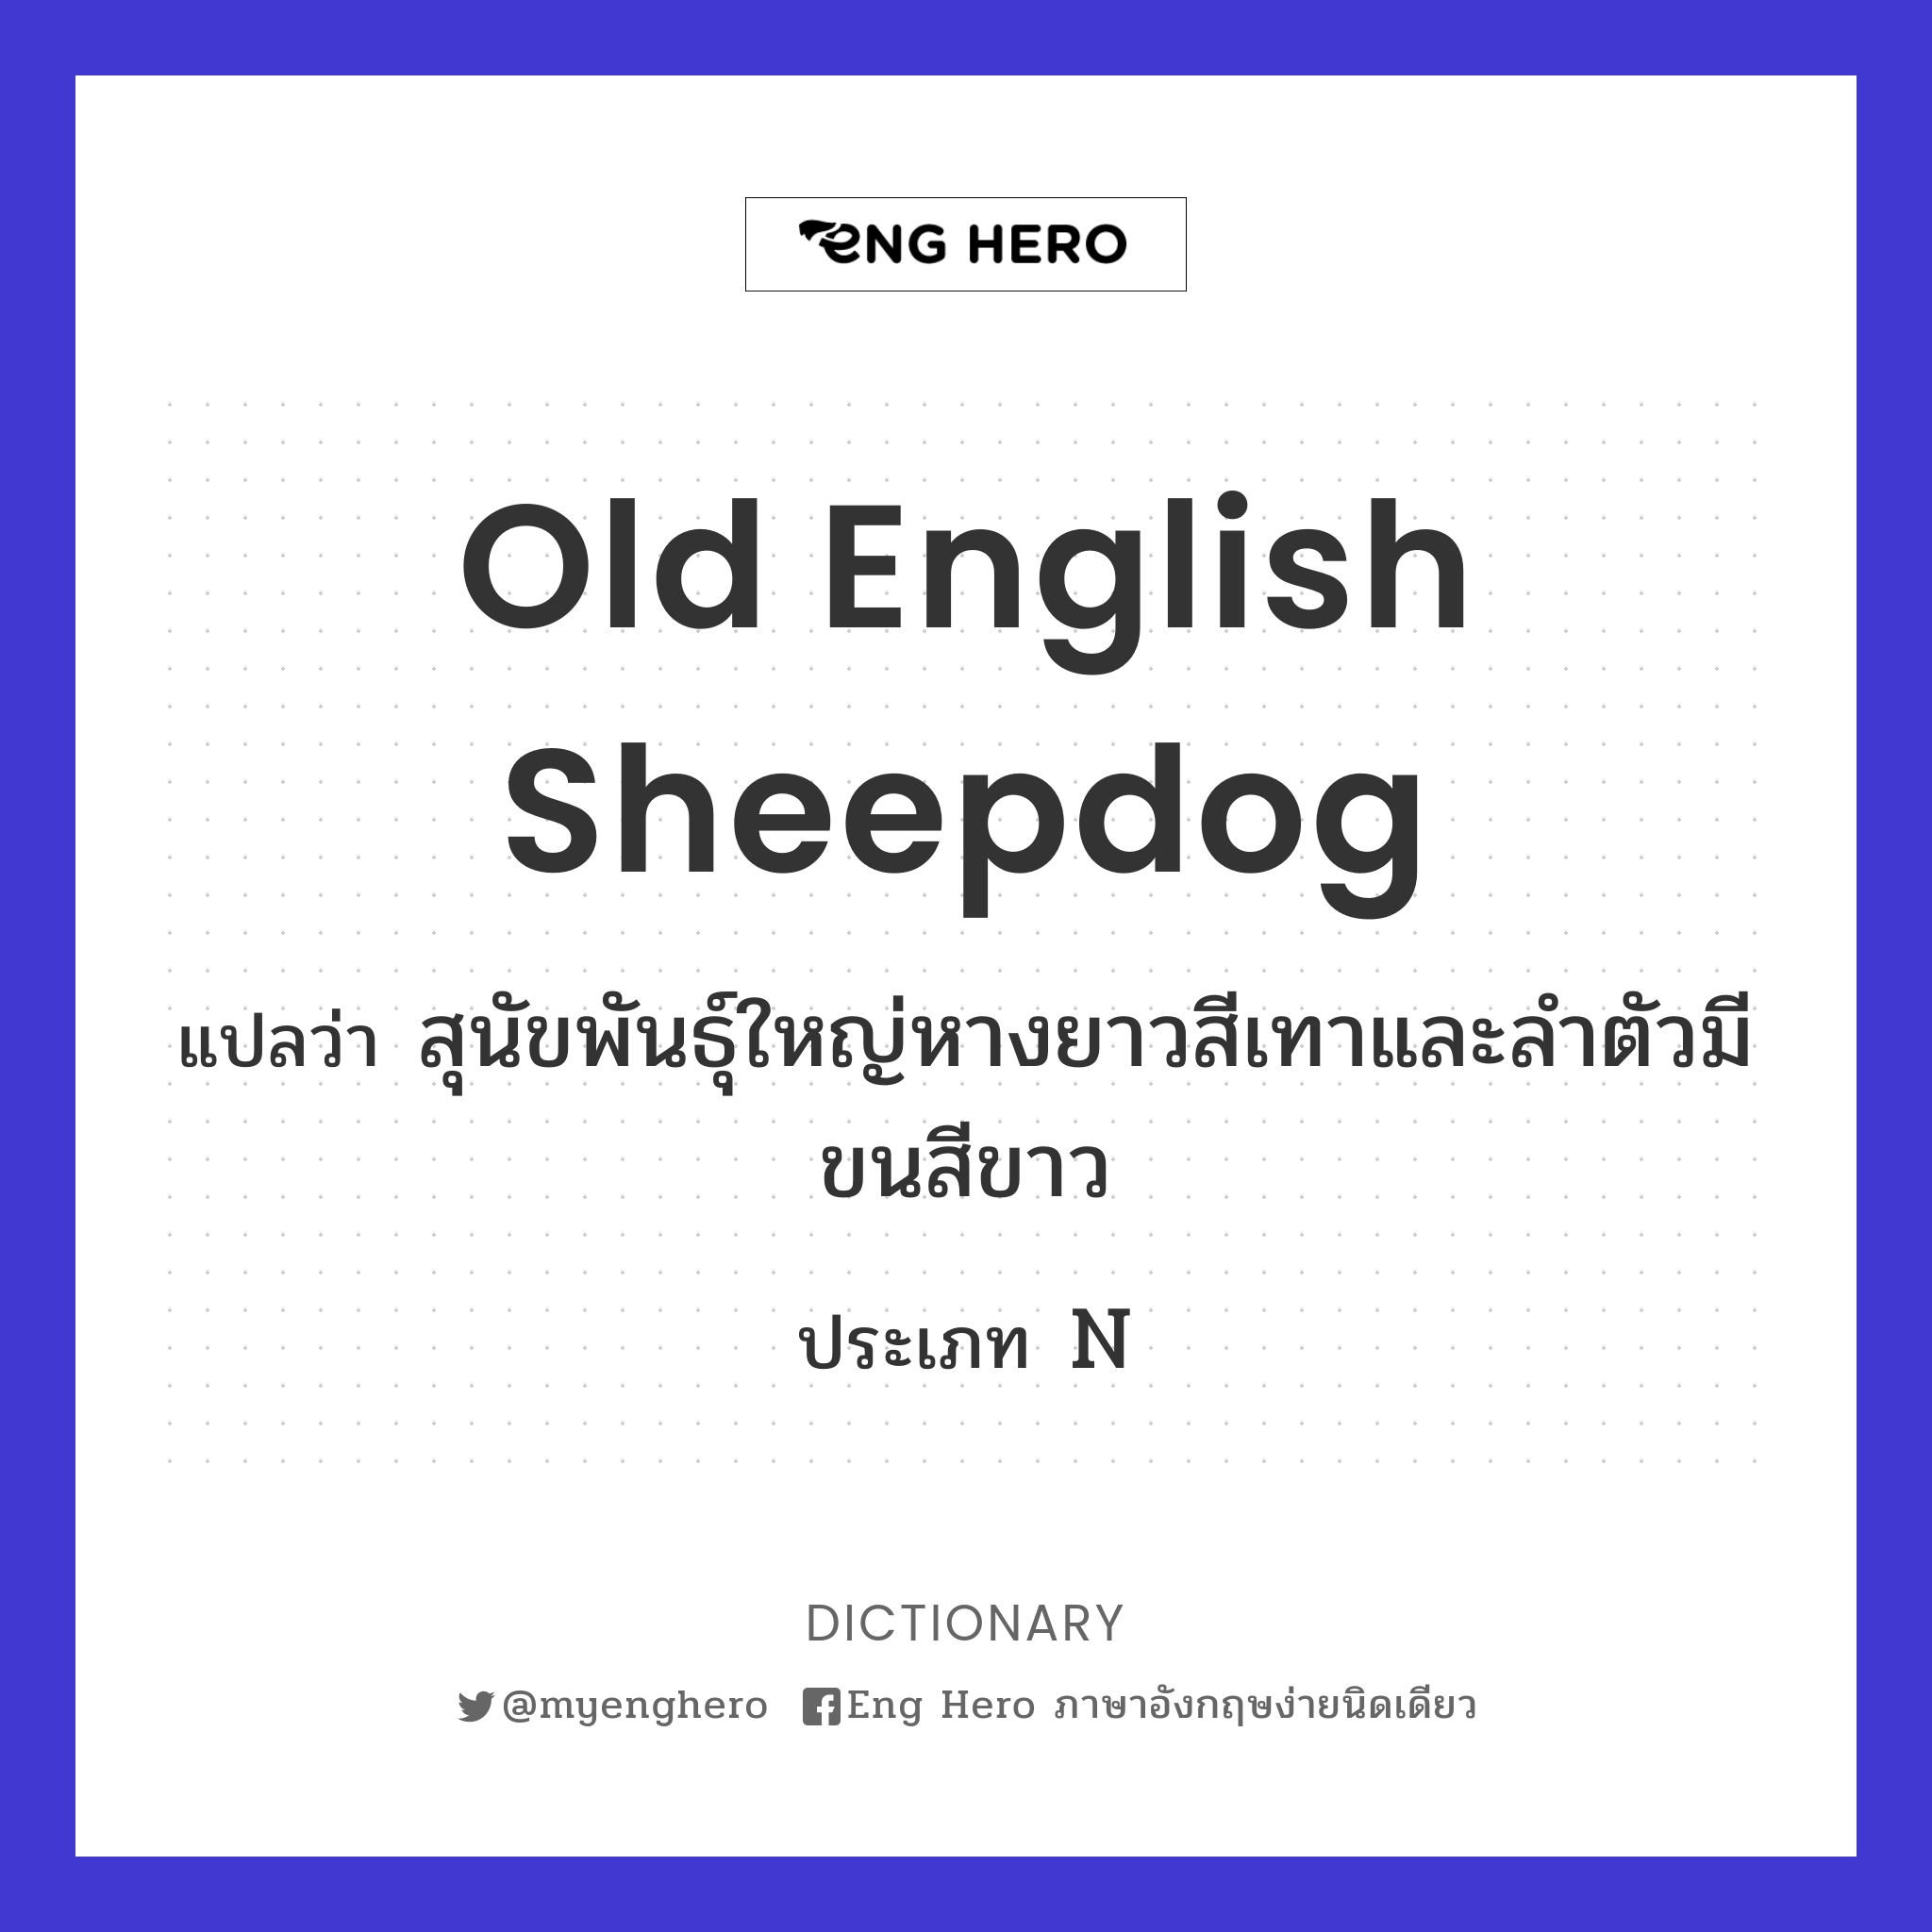 Old English sheepdog